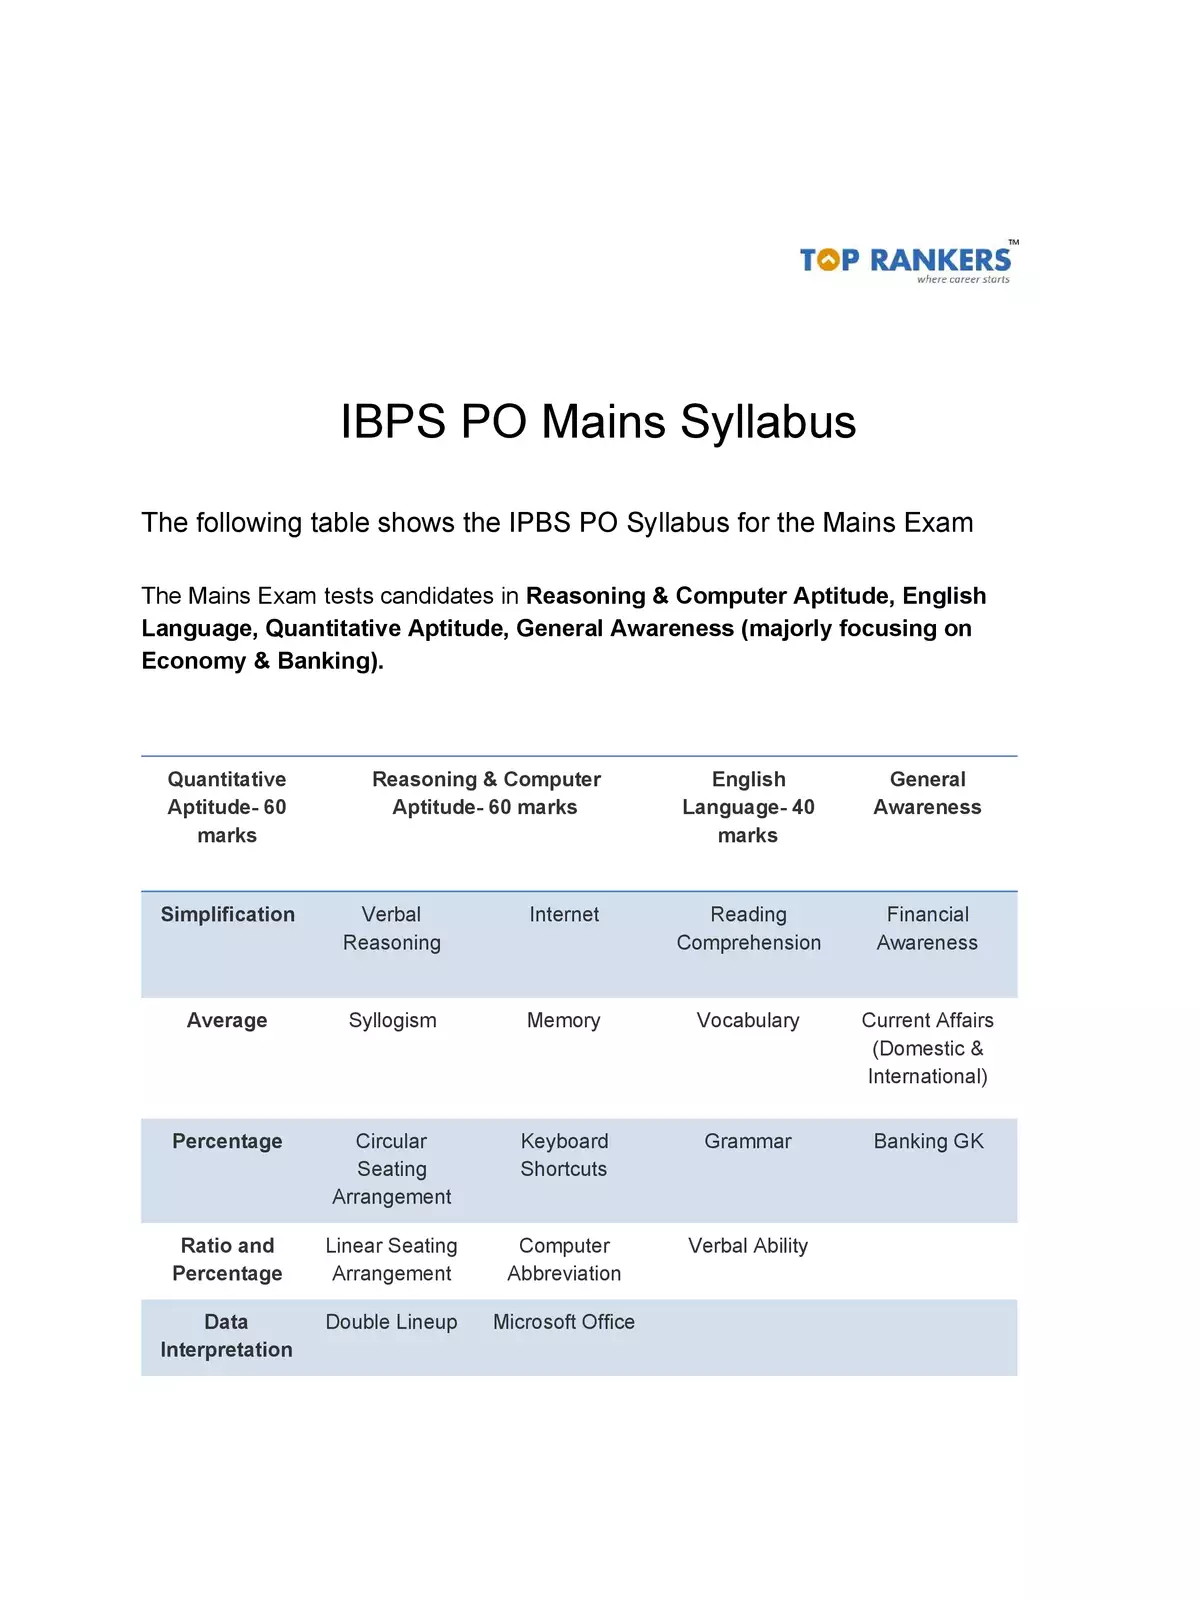 IBPS PO Syllabus 2020-21